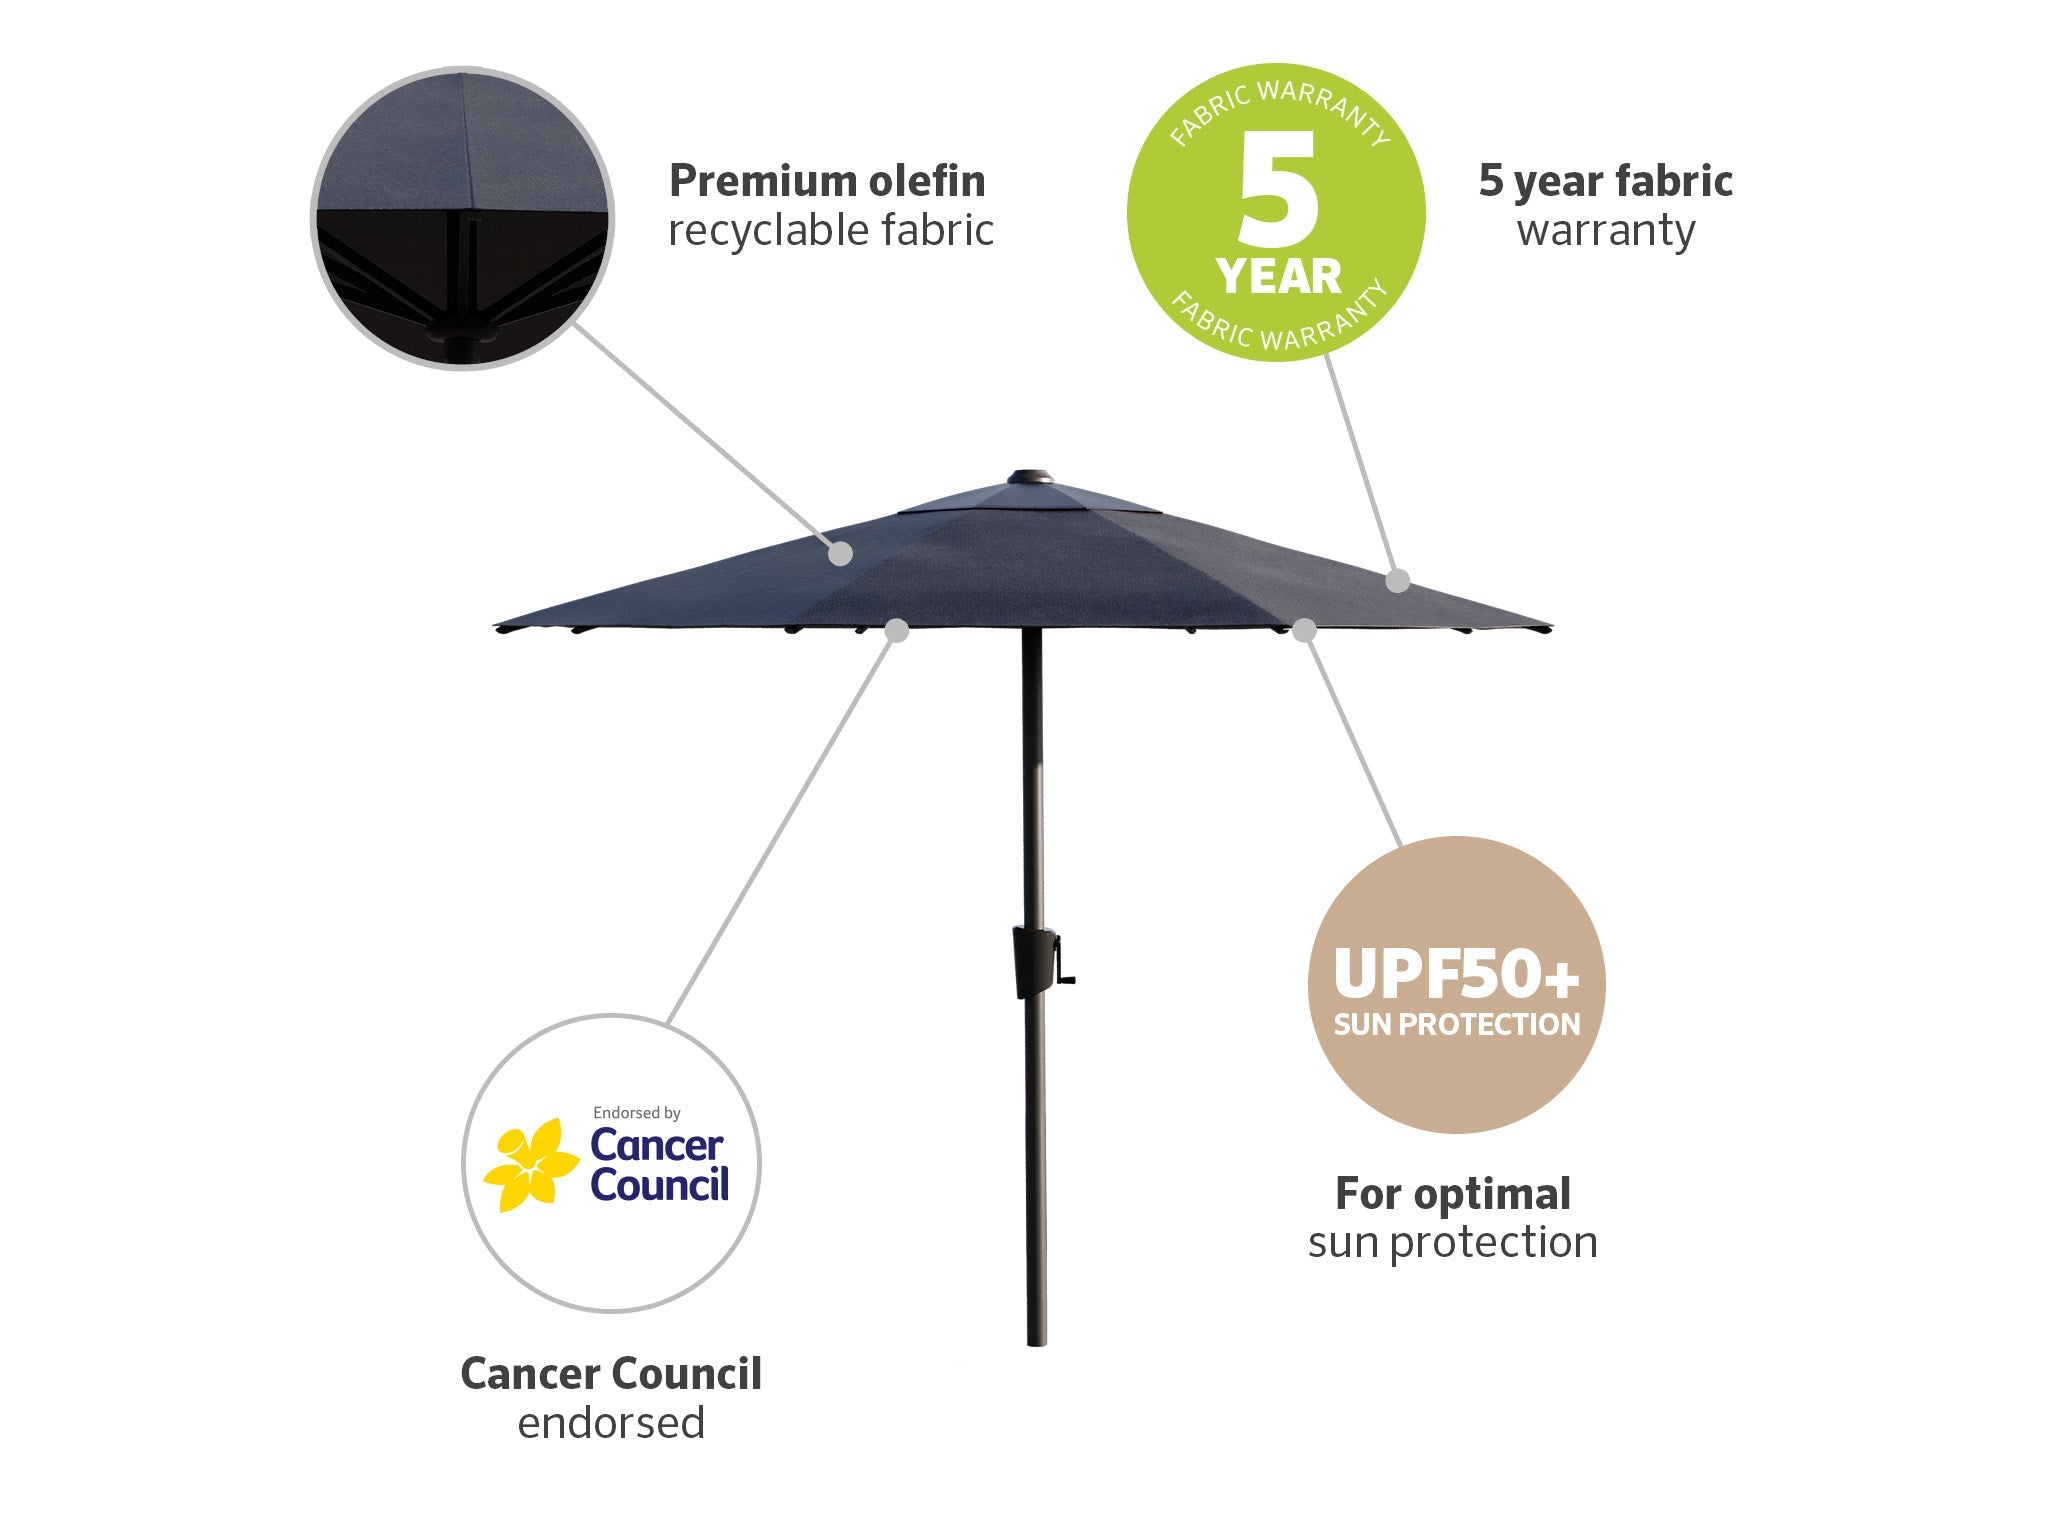 Coolaroo Kuranda 2.5m Round Market Umbrella